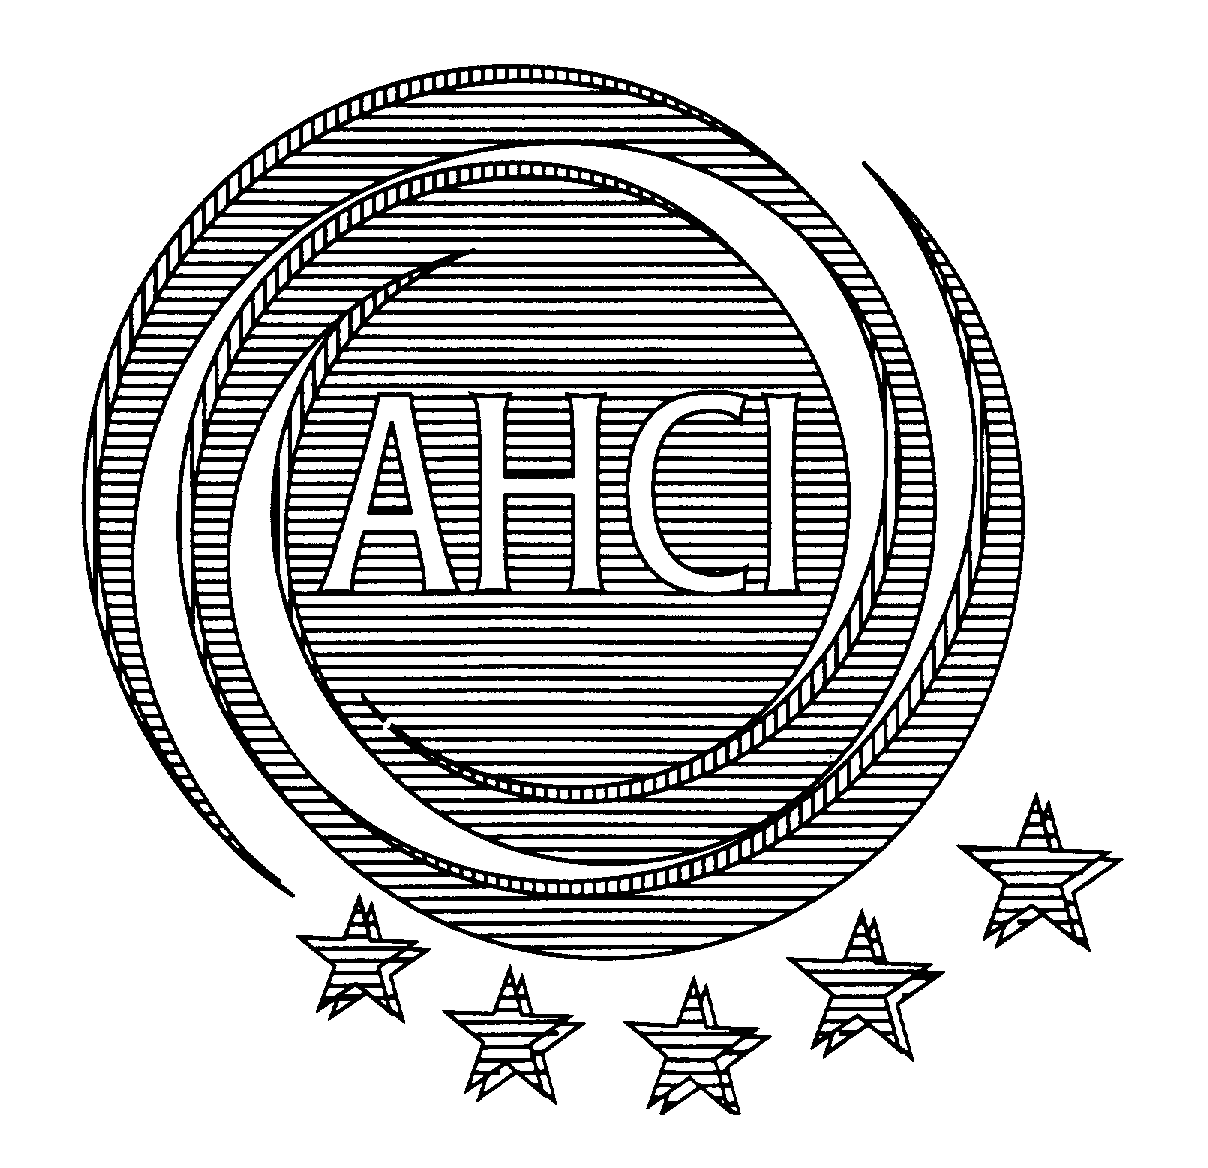 Trademark Logo AHCI